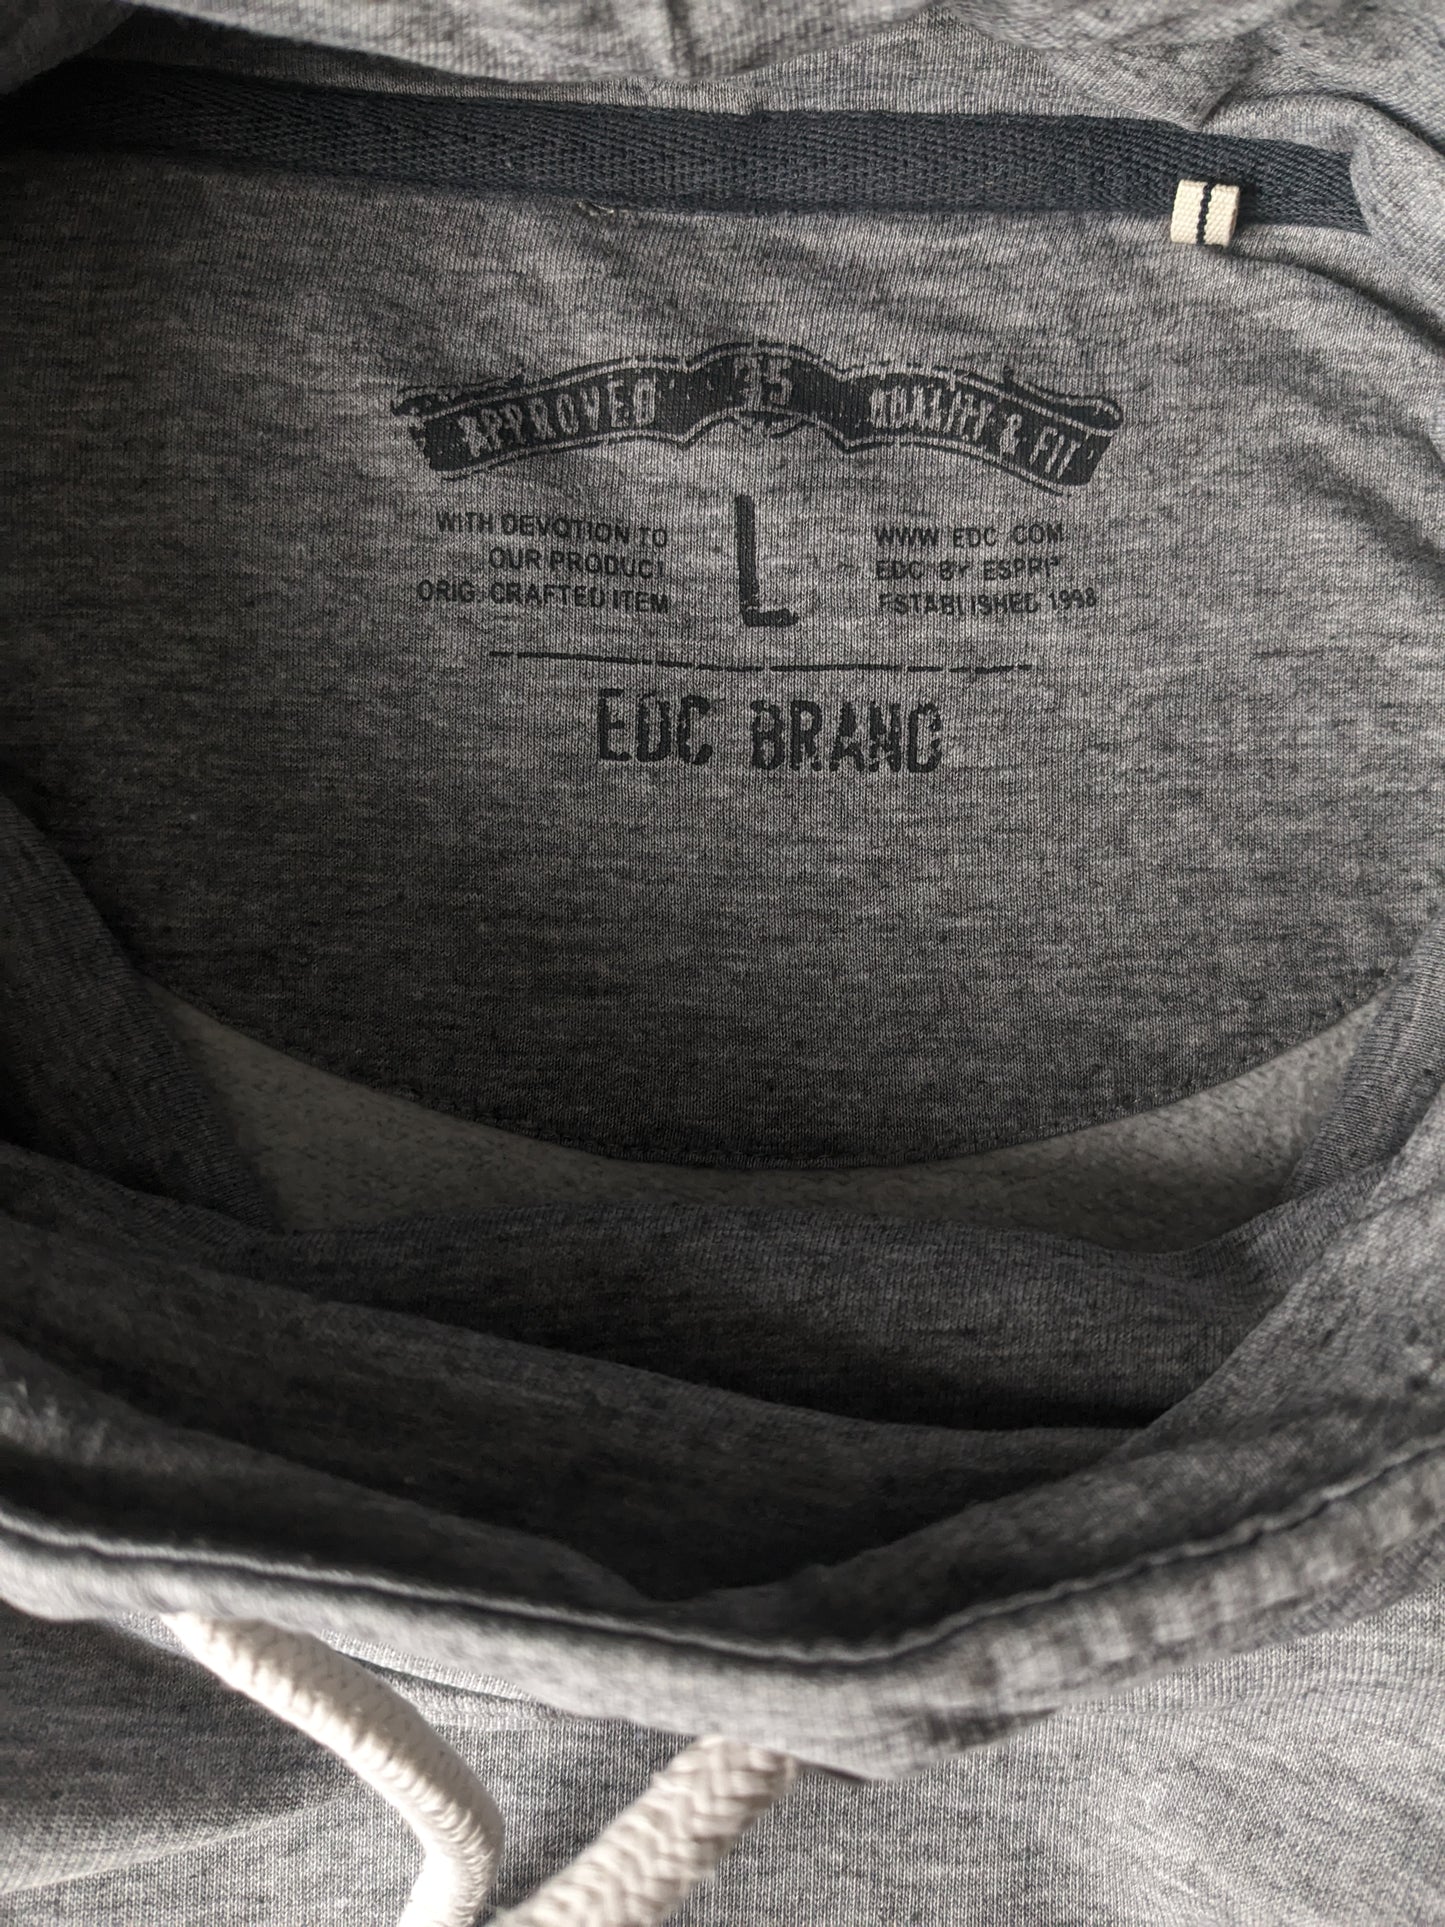 Sweater EDC con cuello de tortuga deportivo. Gris mezclado. Talla L.